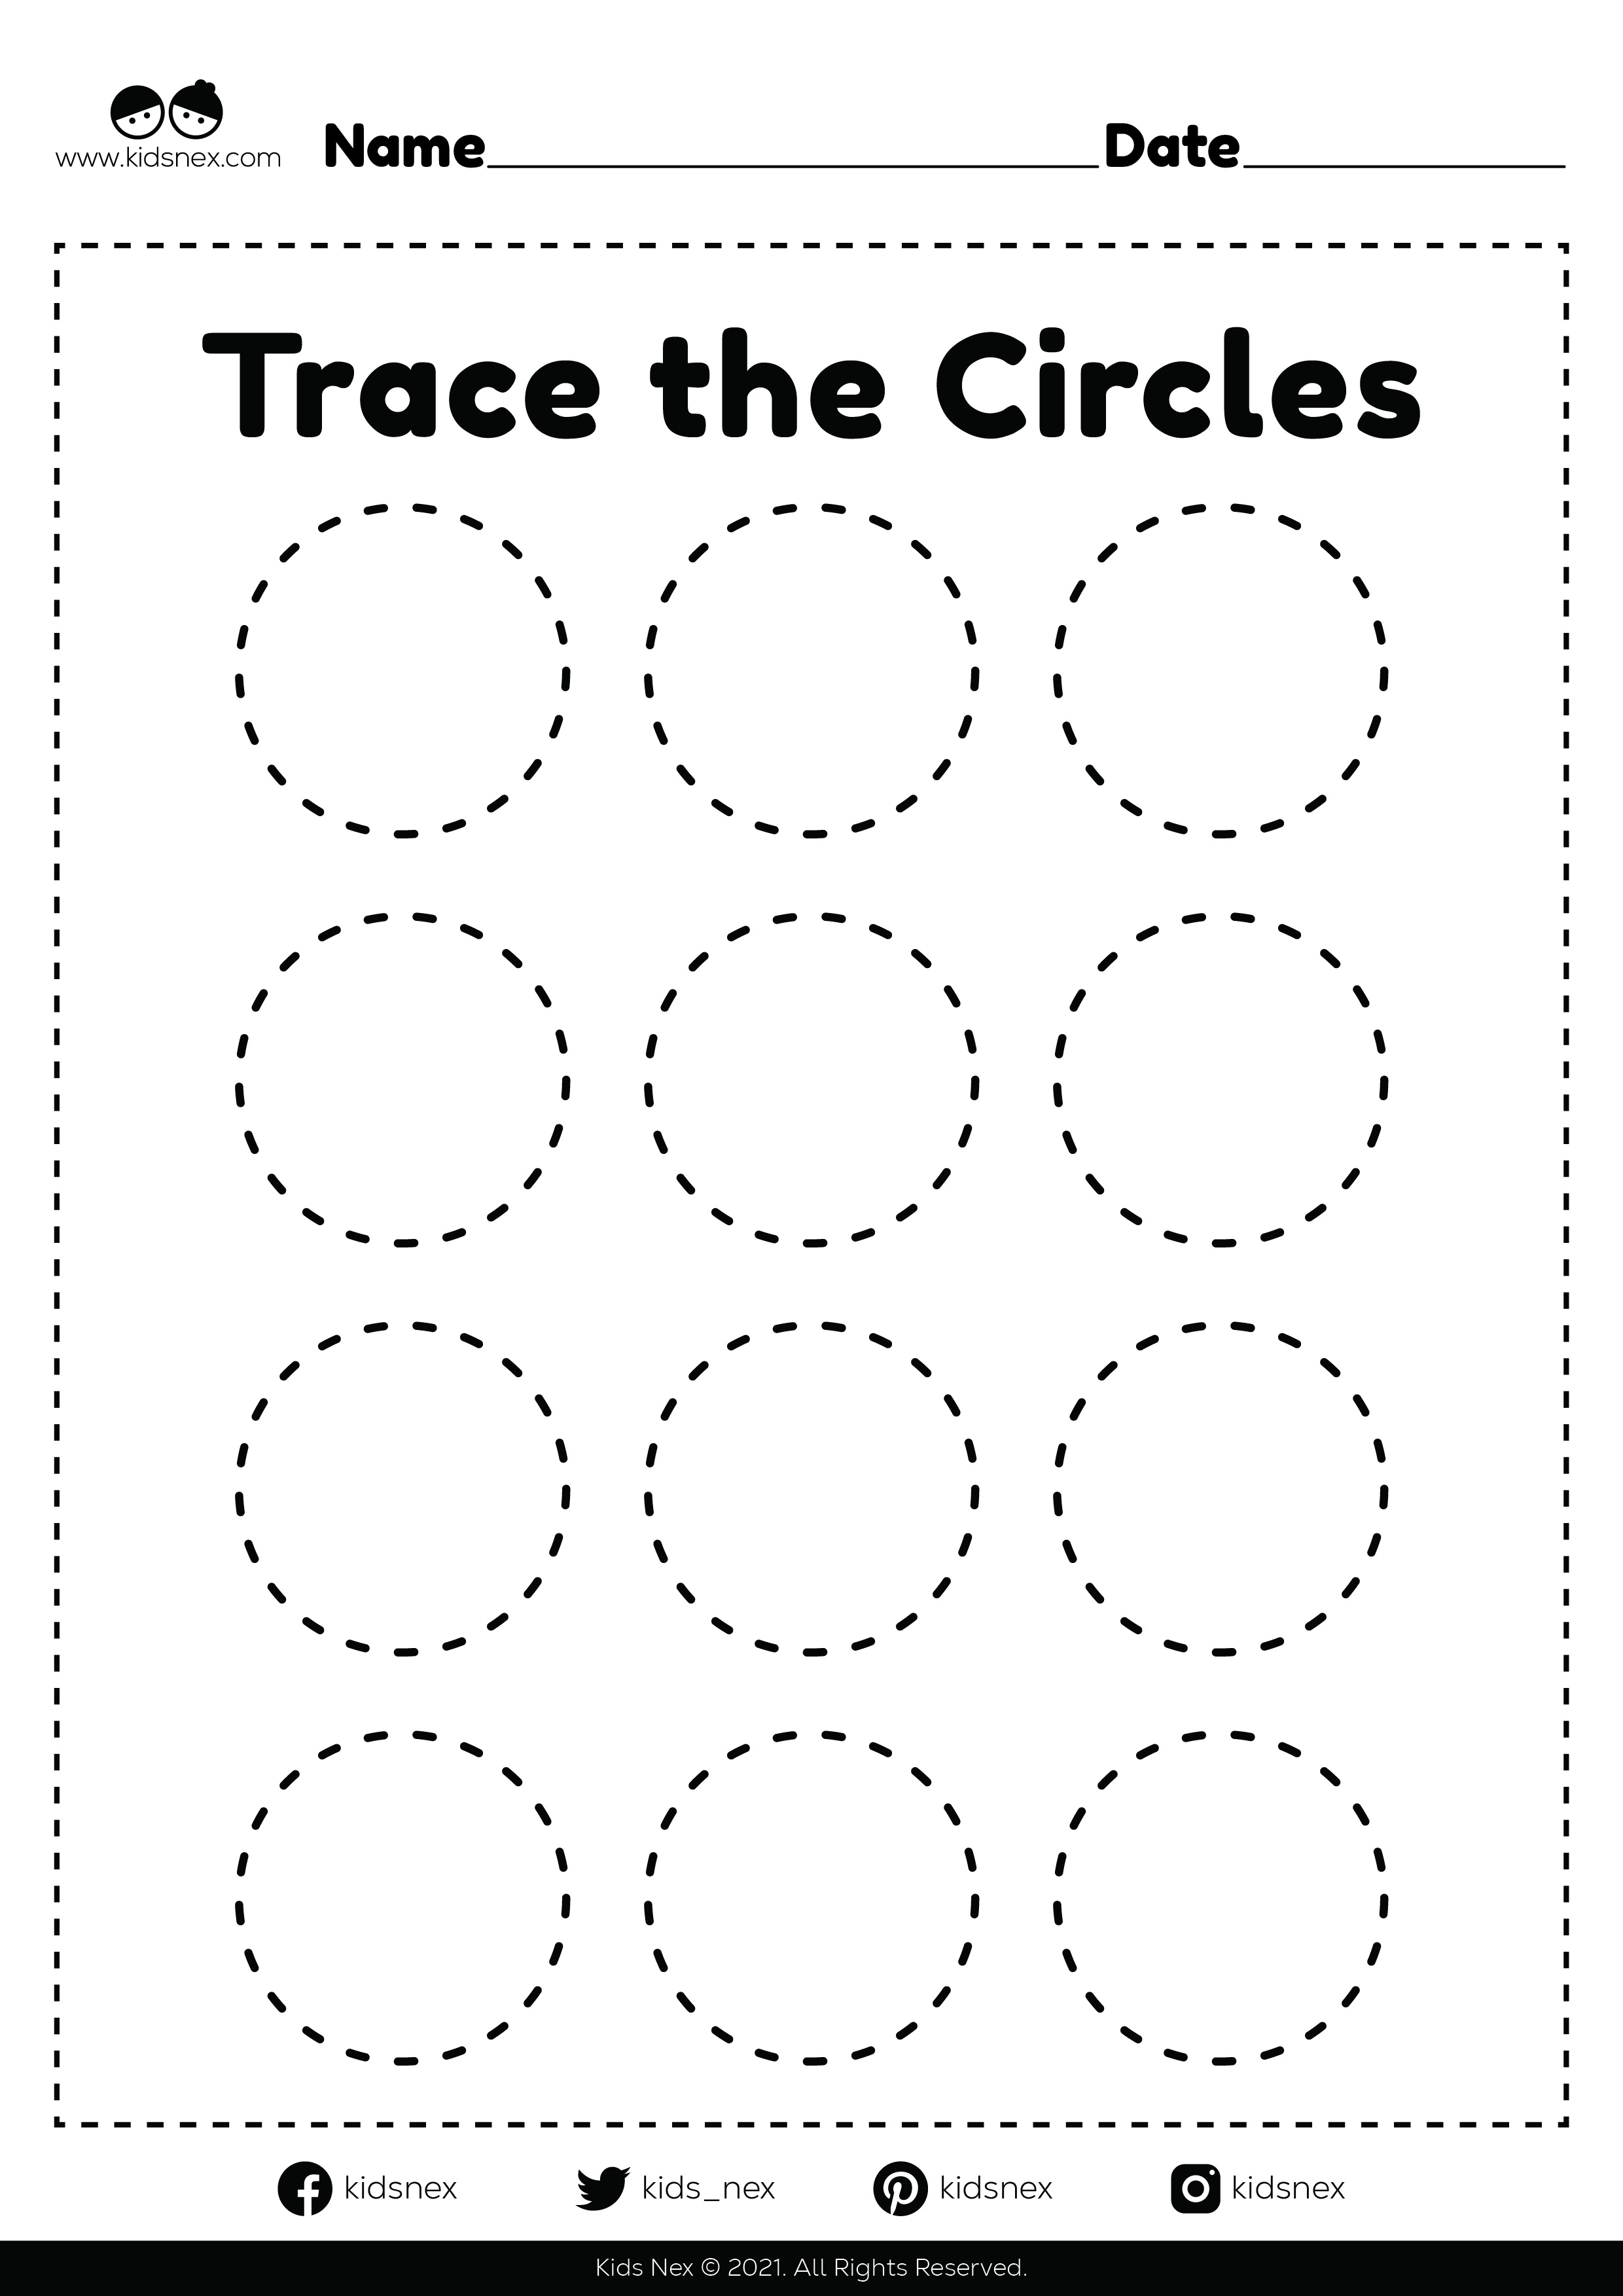 Tracing circles for kids educational worksheet for kindergarten